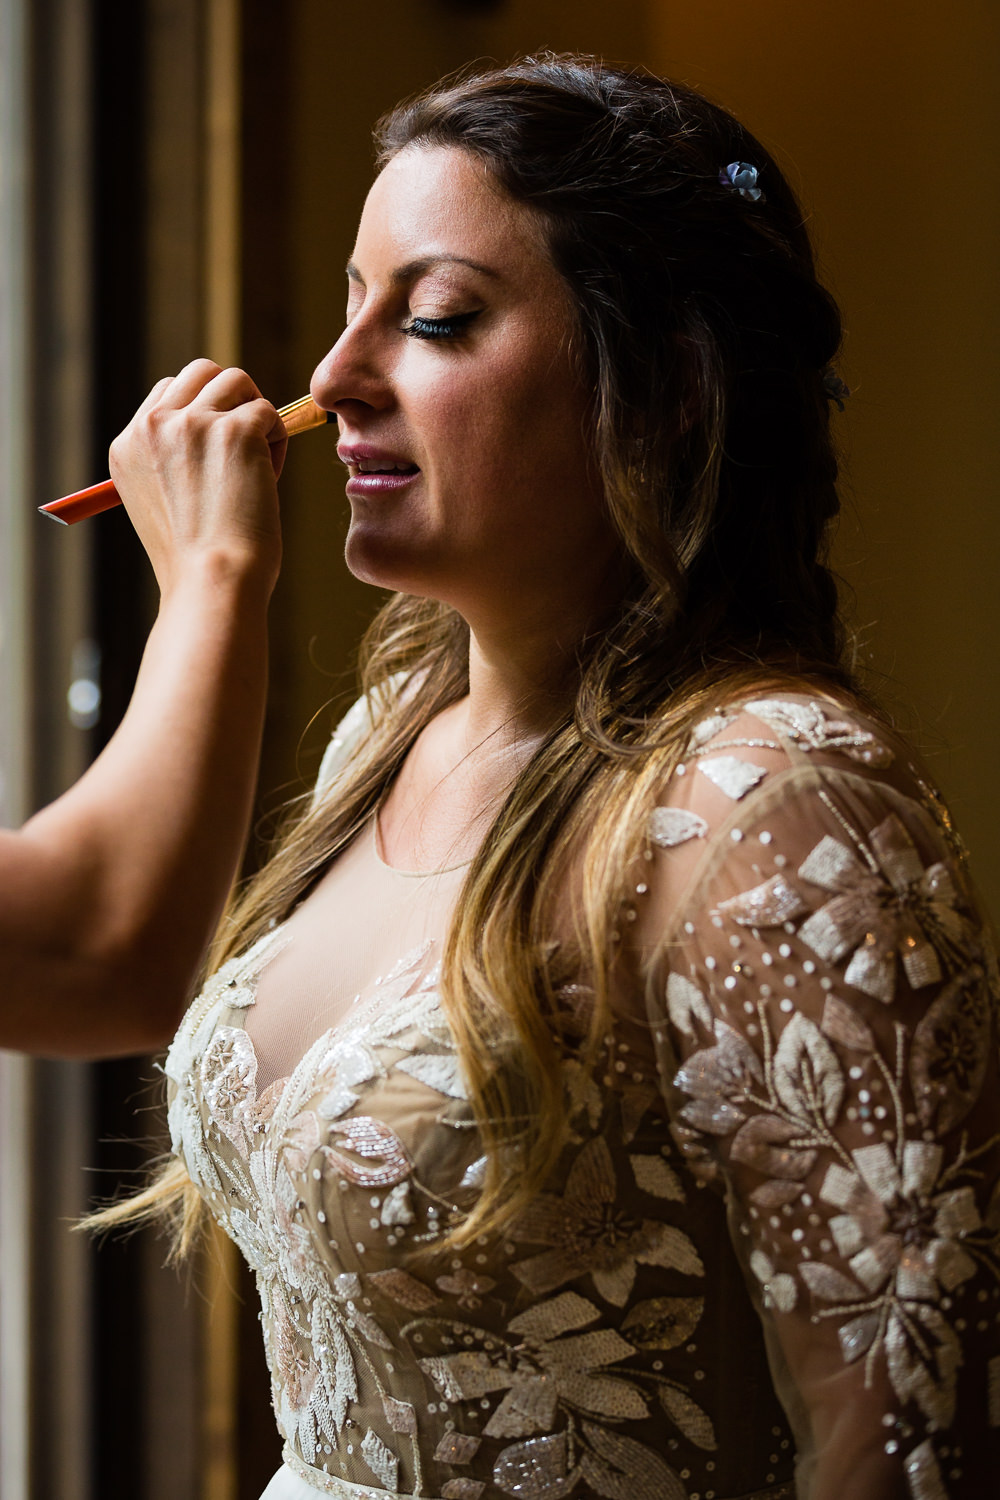 bozeman-hart-ranch-wedding-bride-does-final-makeup-check.jpg